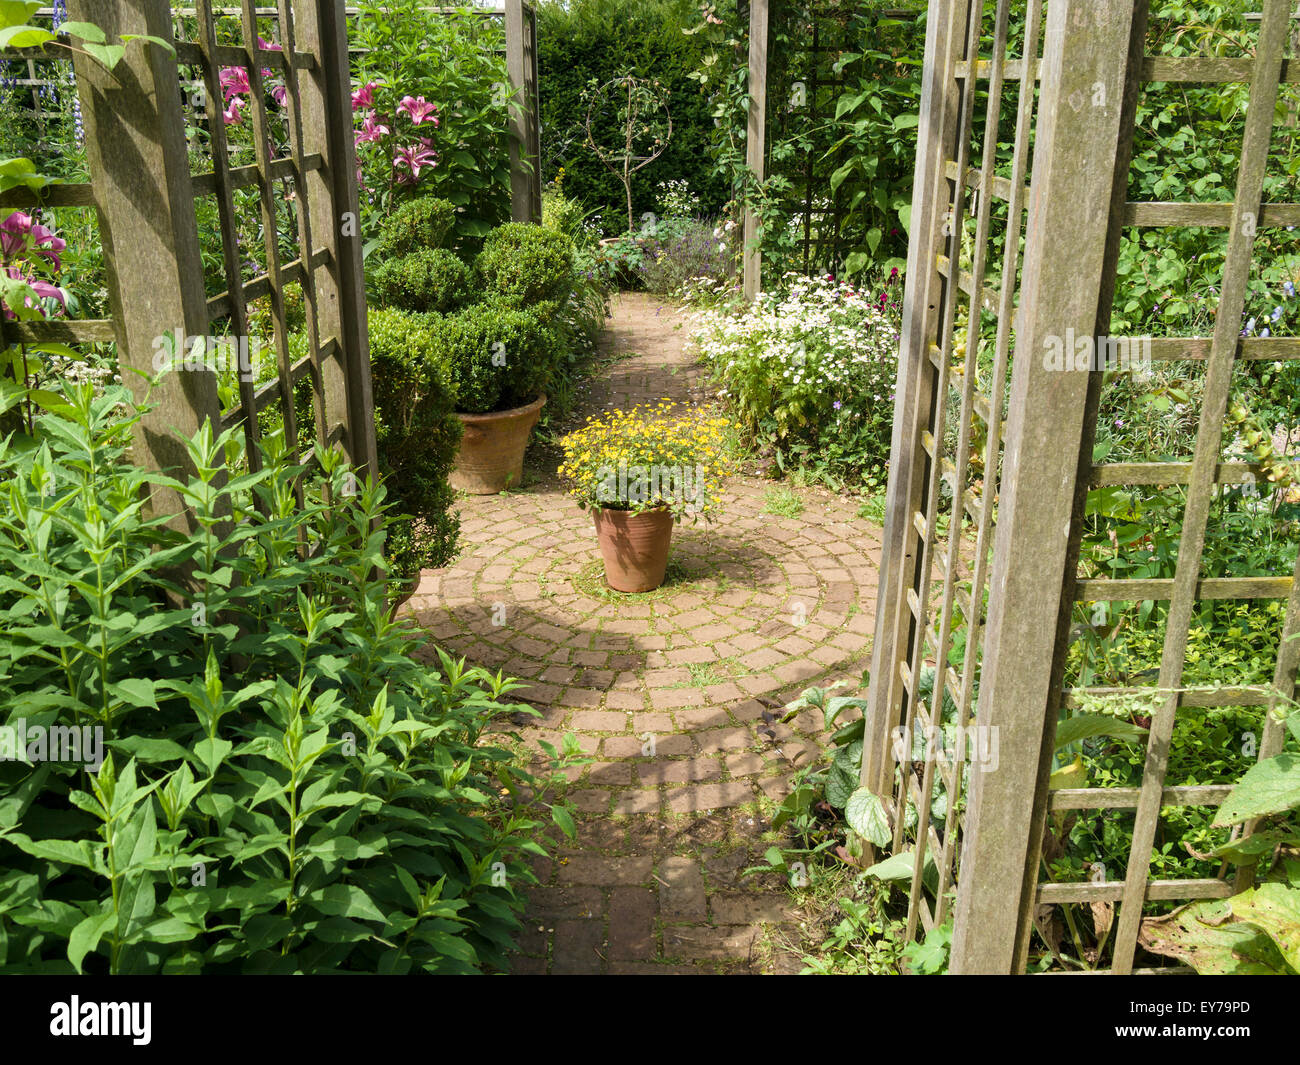 Cottage garden with plants, trellis, brick paver paths and patio planters, Barnsdale Gardens, Rutland, England, UK. Stock Photo